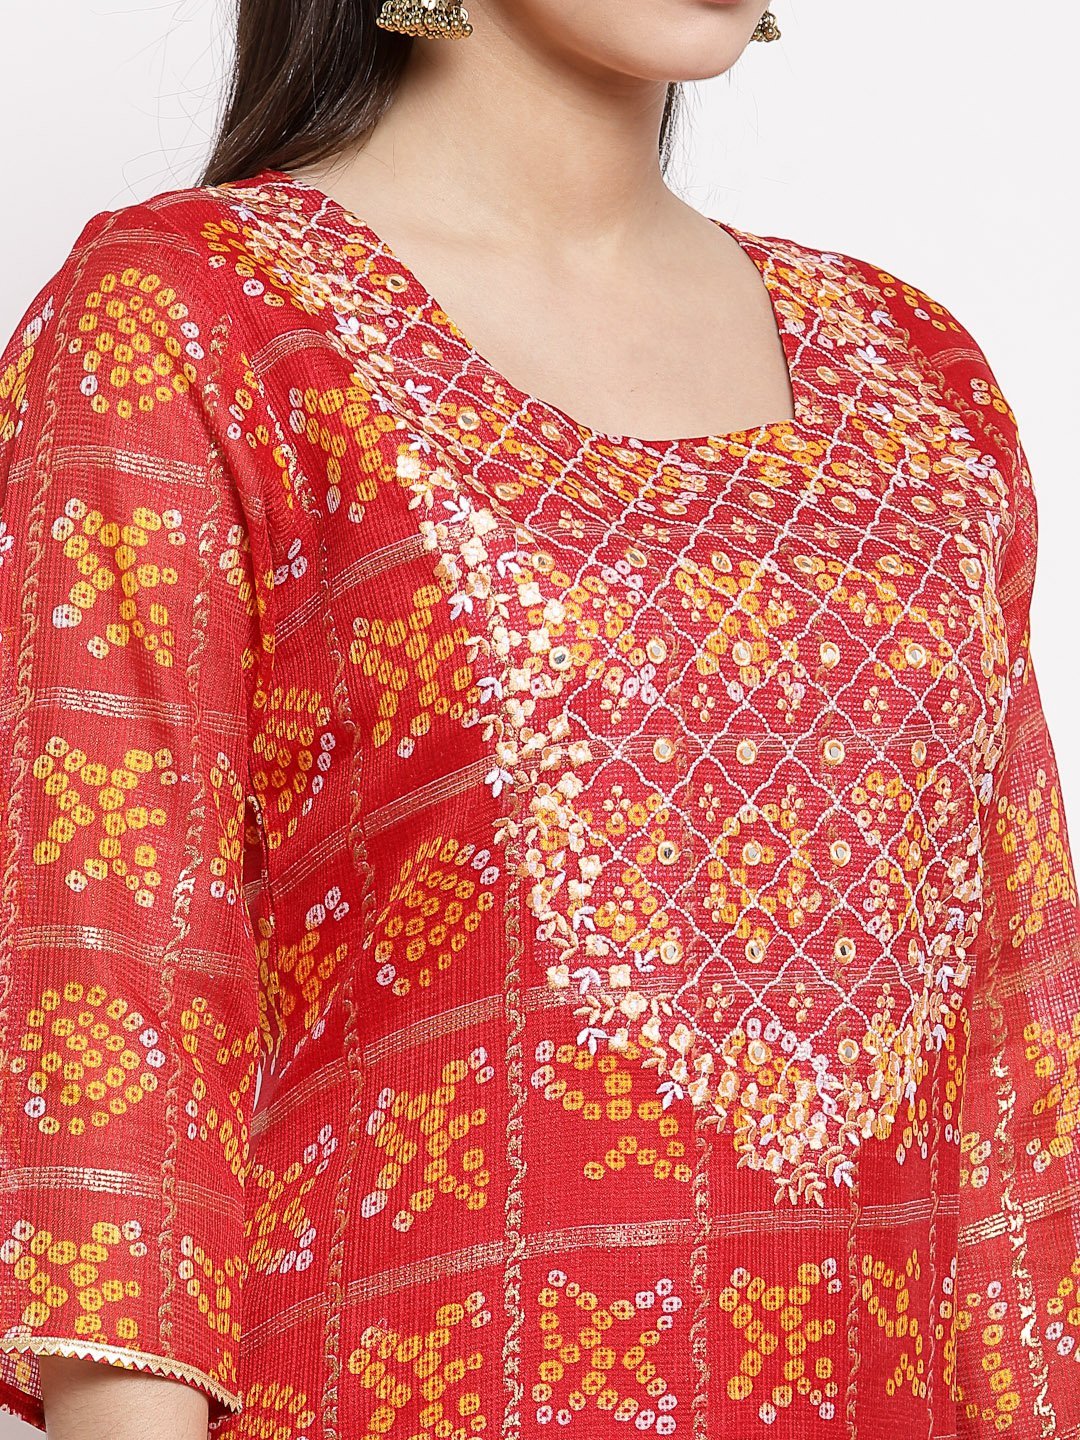 Women's Red Cotton Printed 3/4 Sleeve Square Neck Casual Kurta - Myshka